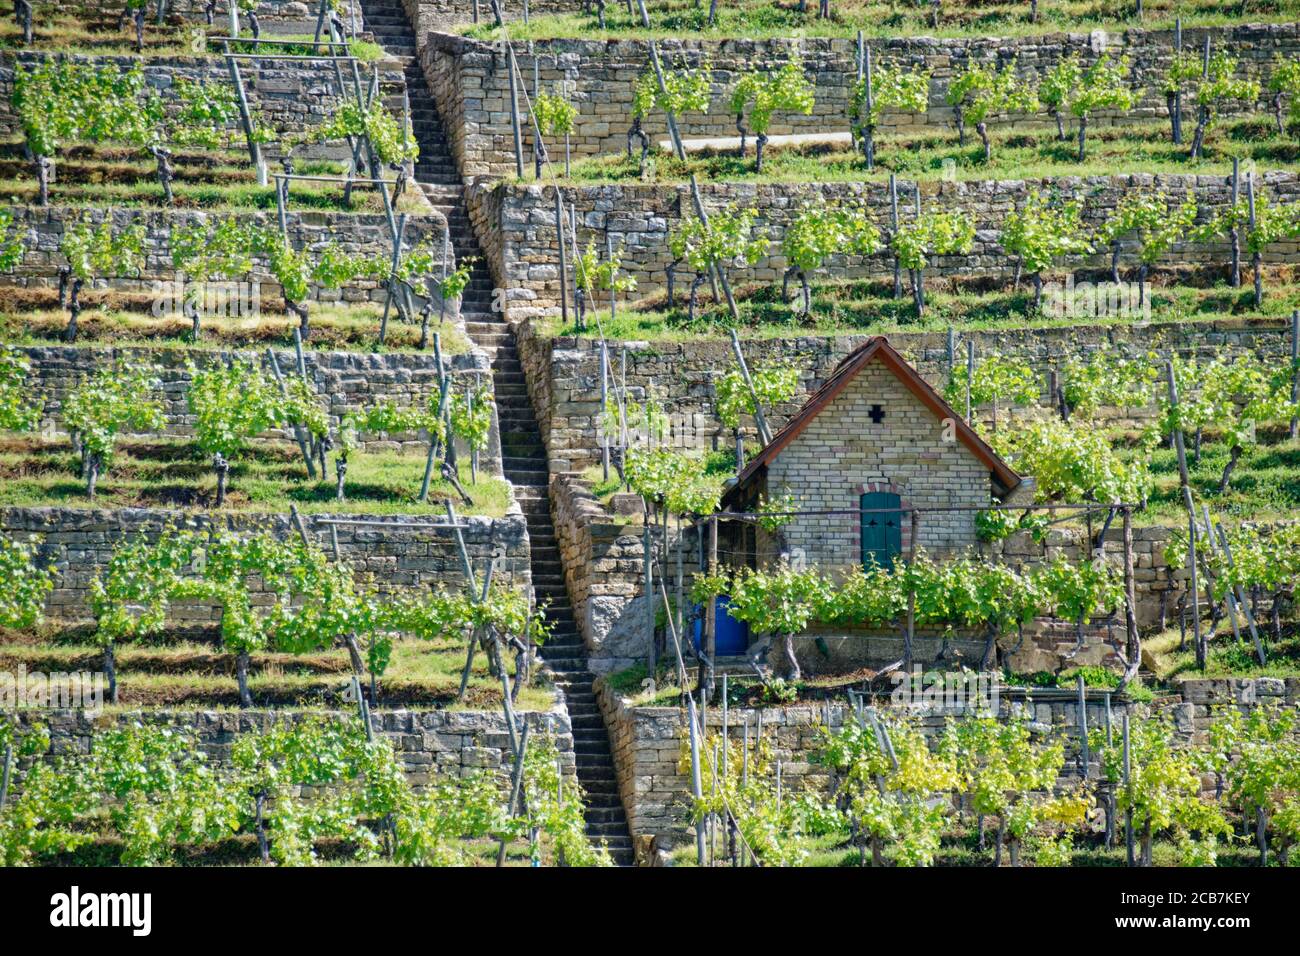 Stuttgart winegrowing Stock Photo